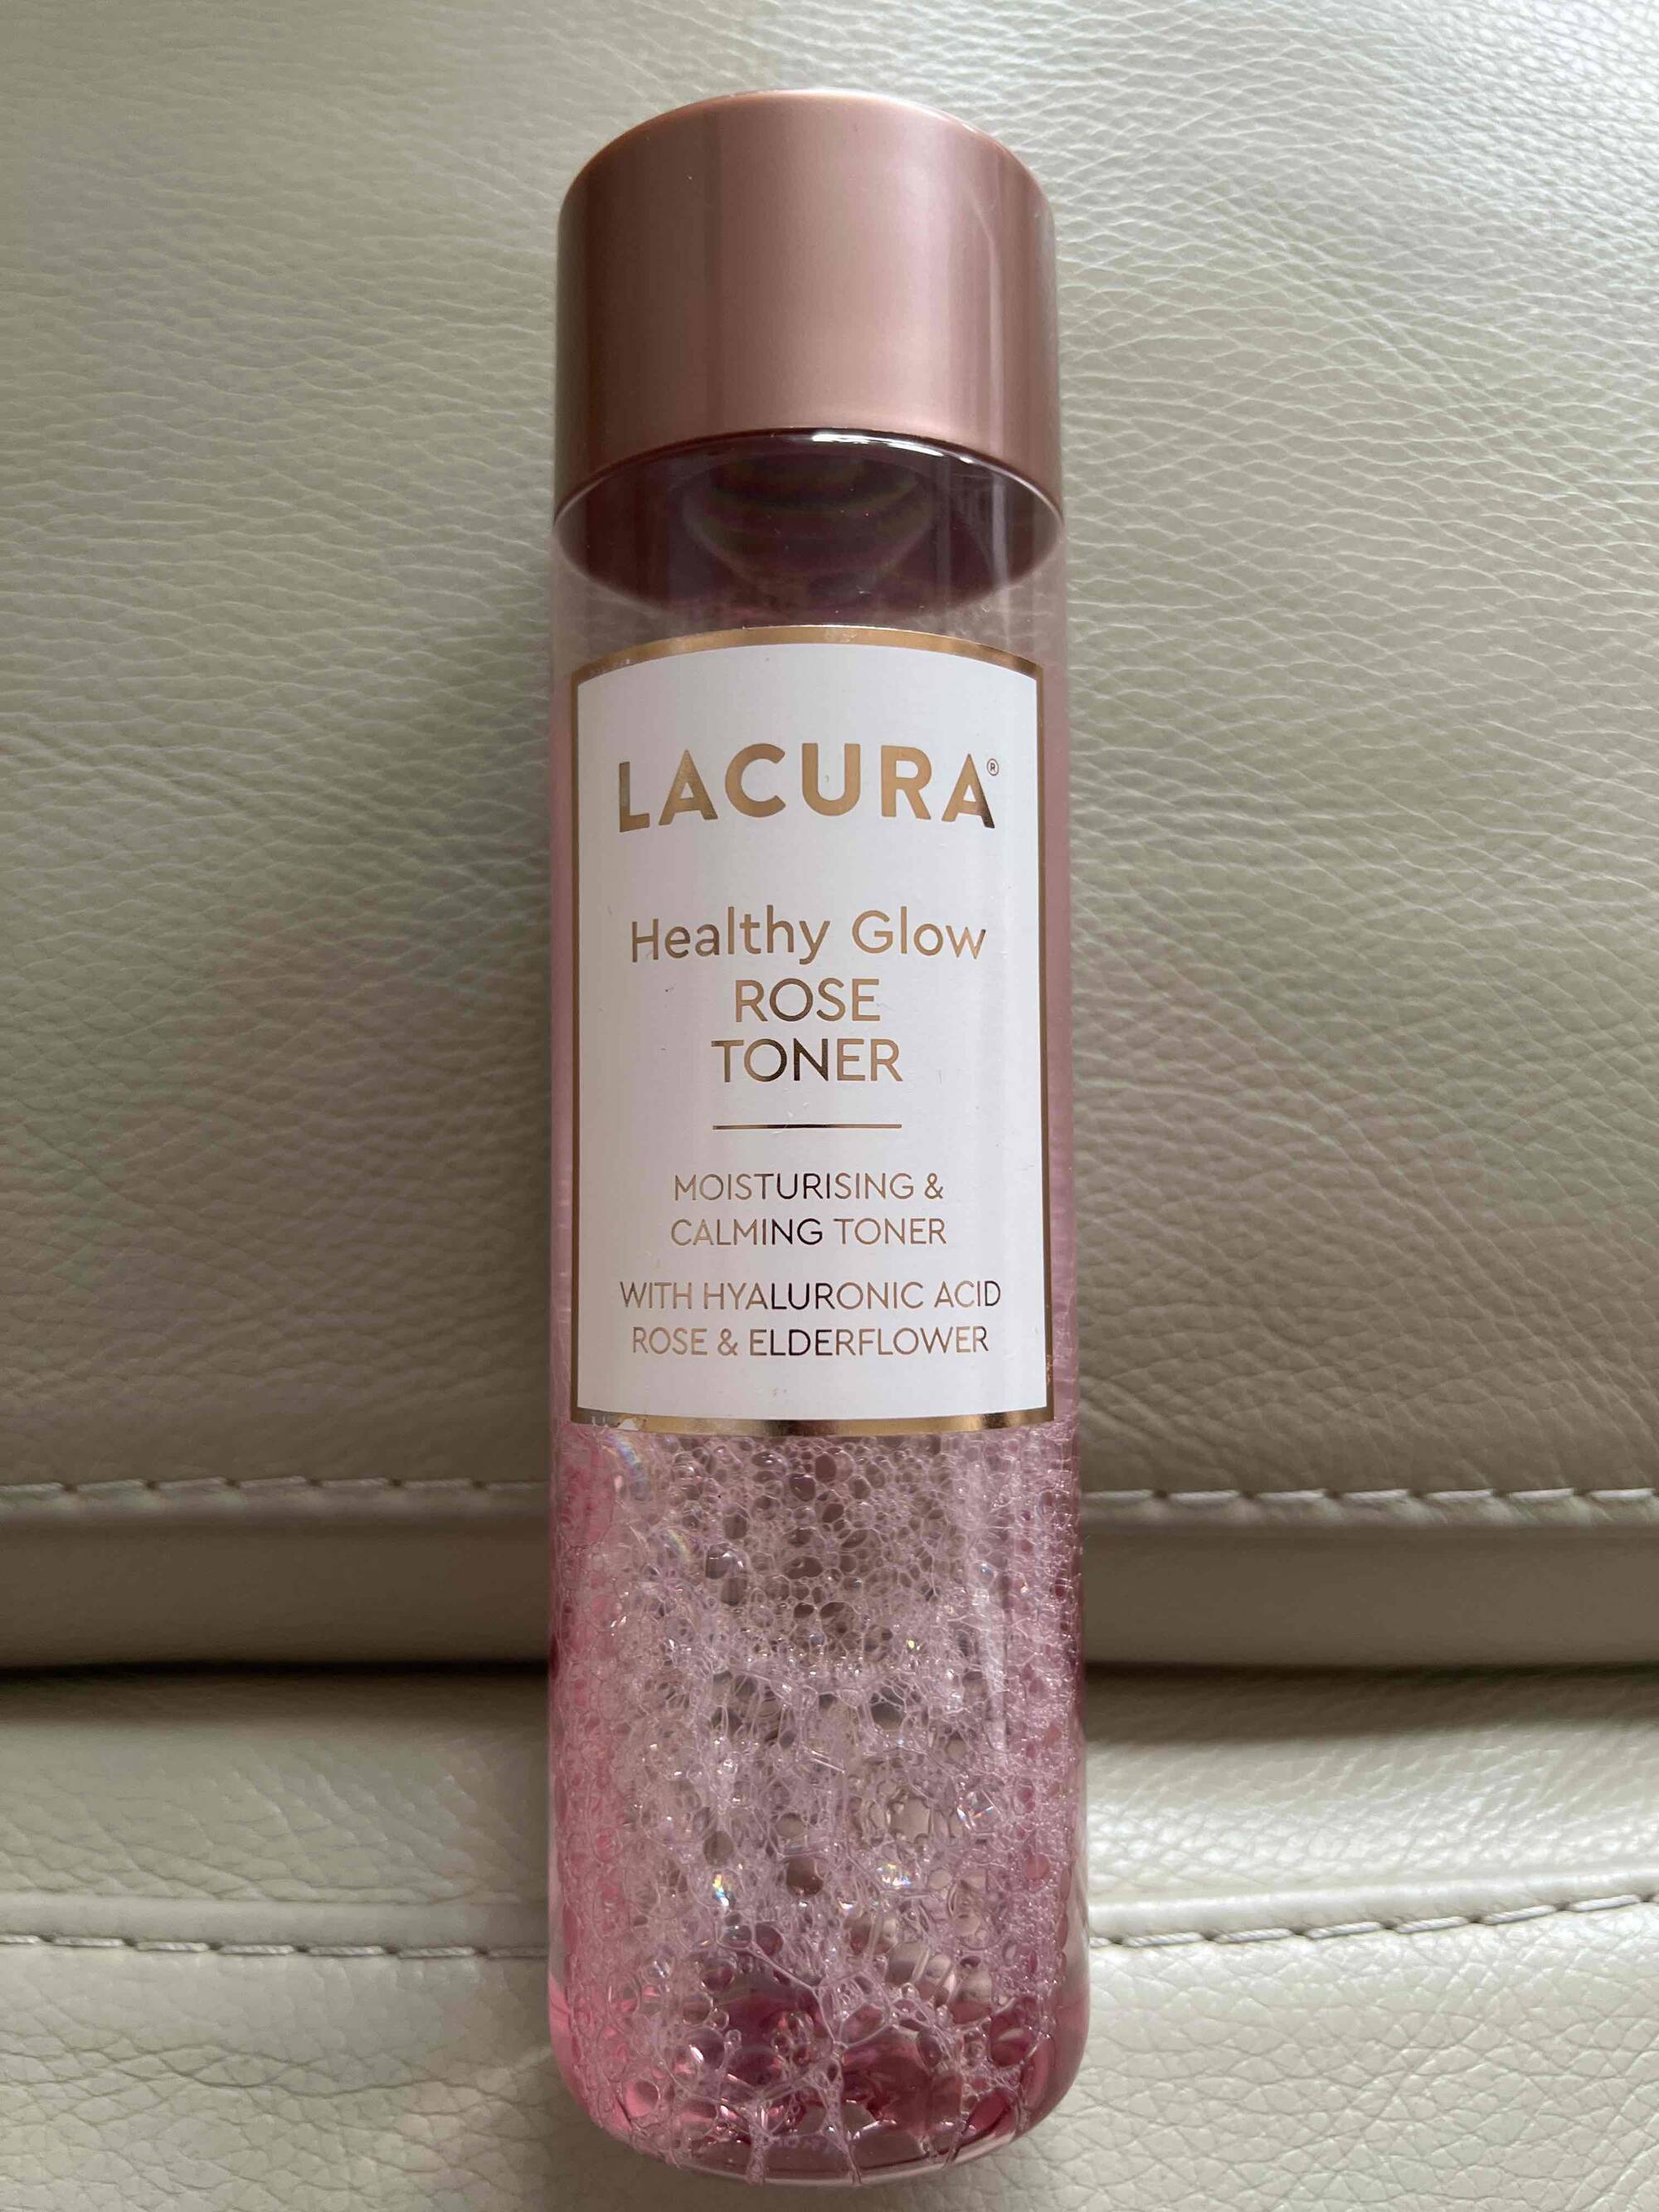 LACURA - Rose toner - Healthy glow 